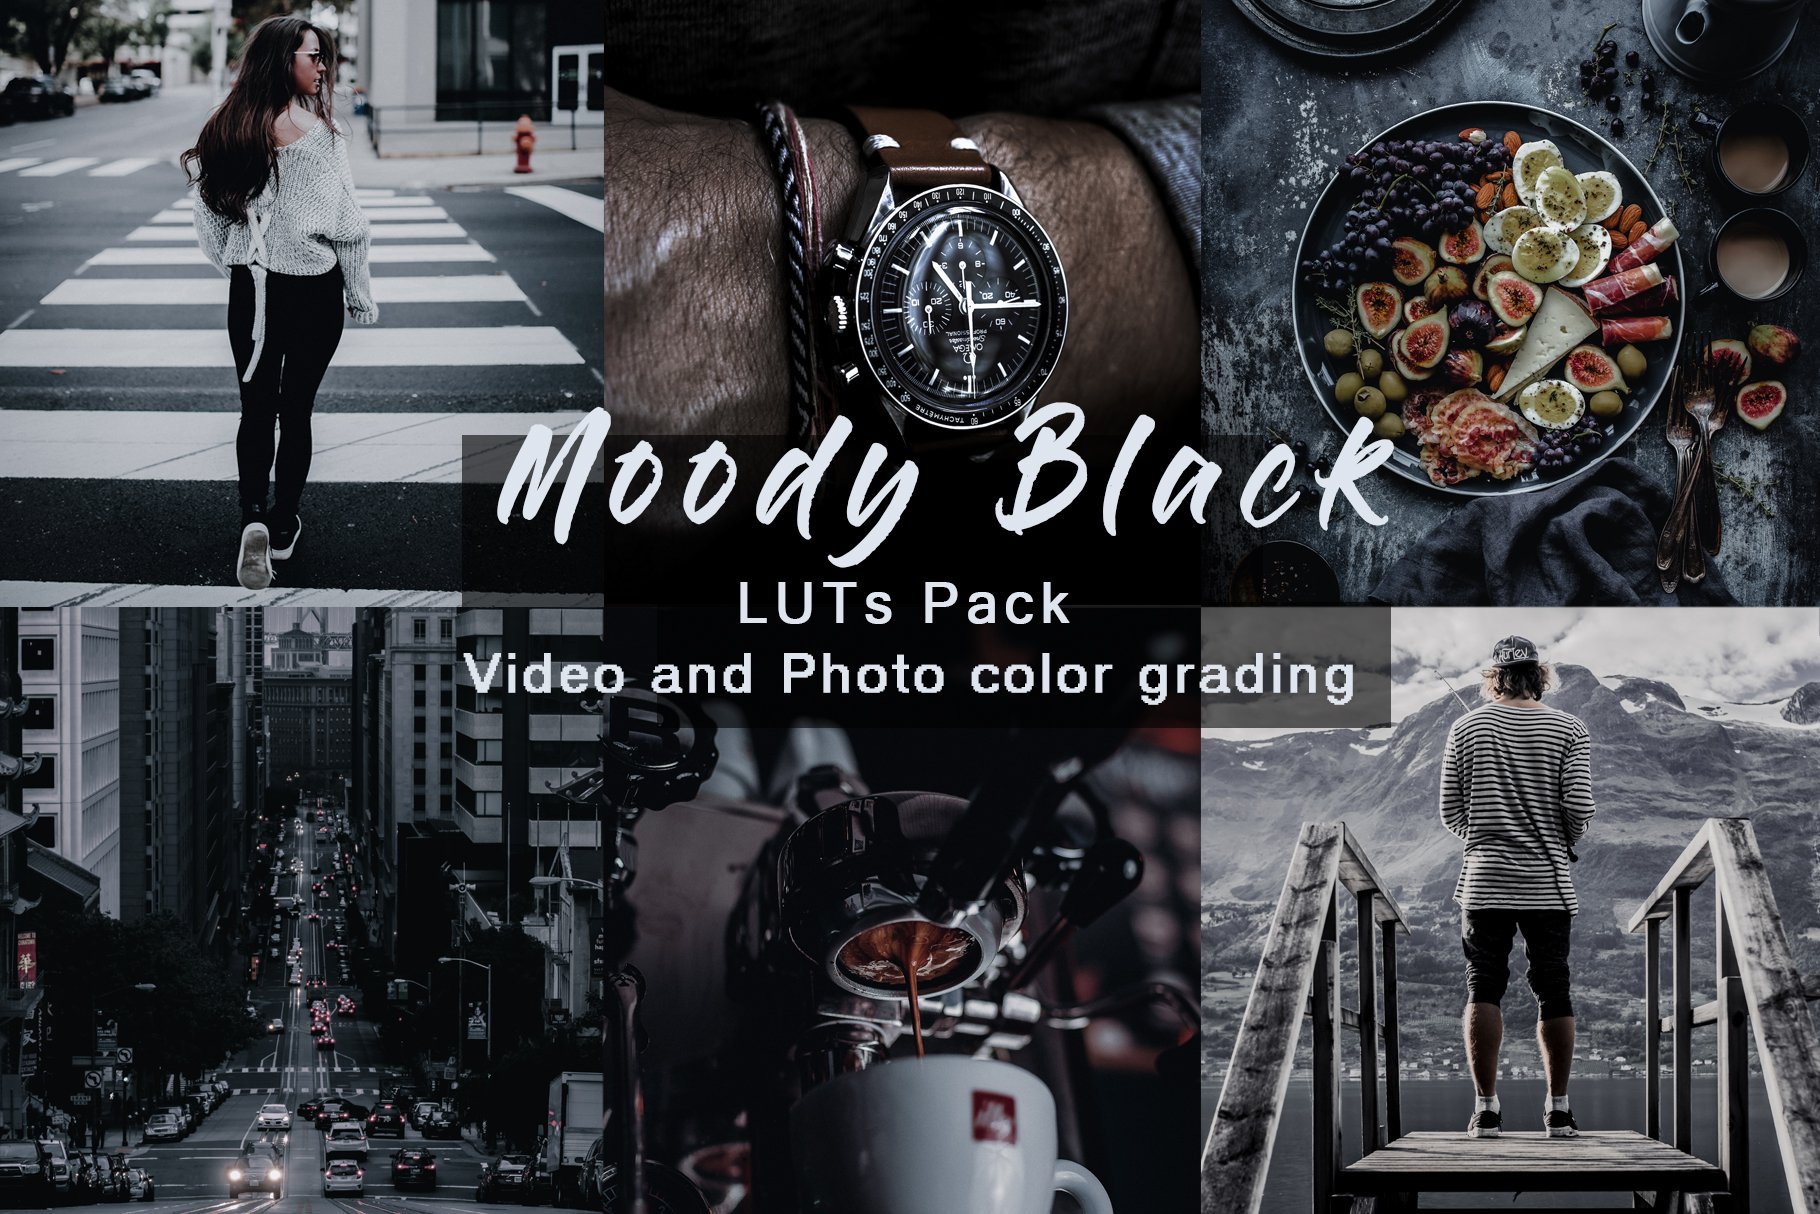 Moody Black | Video LUTs Bundlecover image.